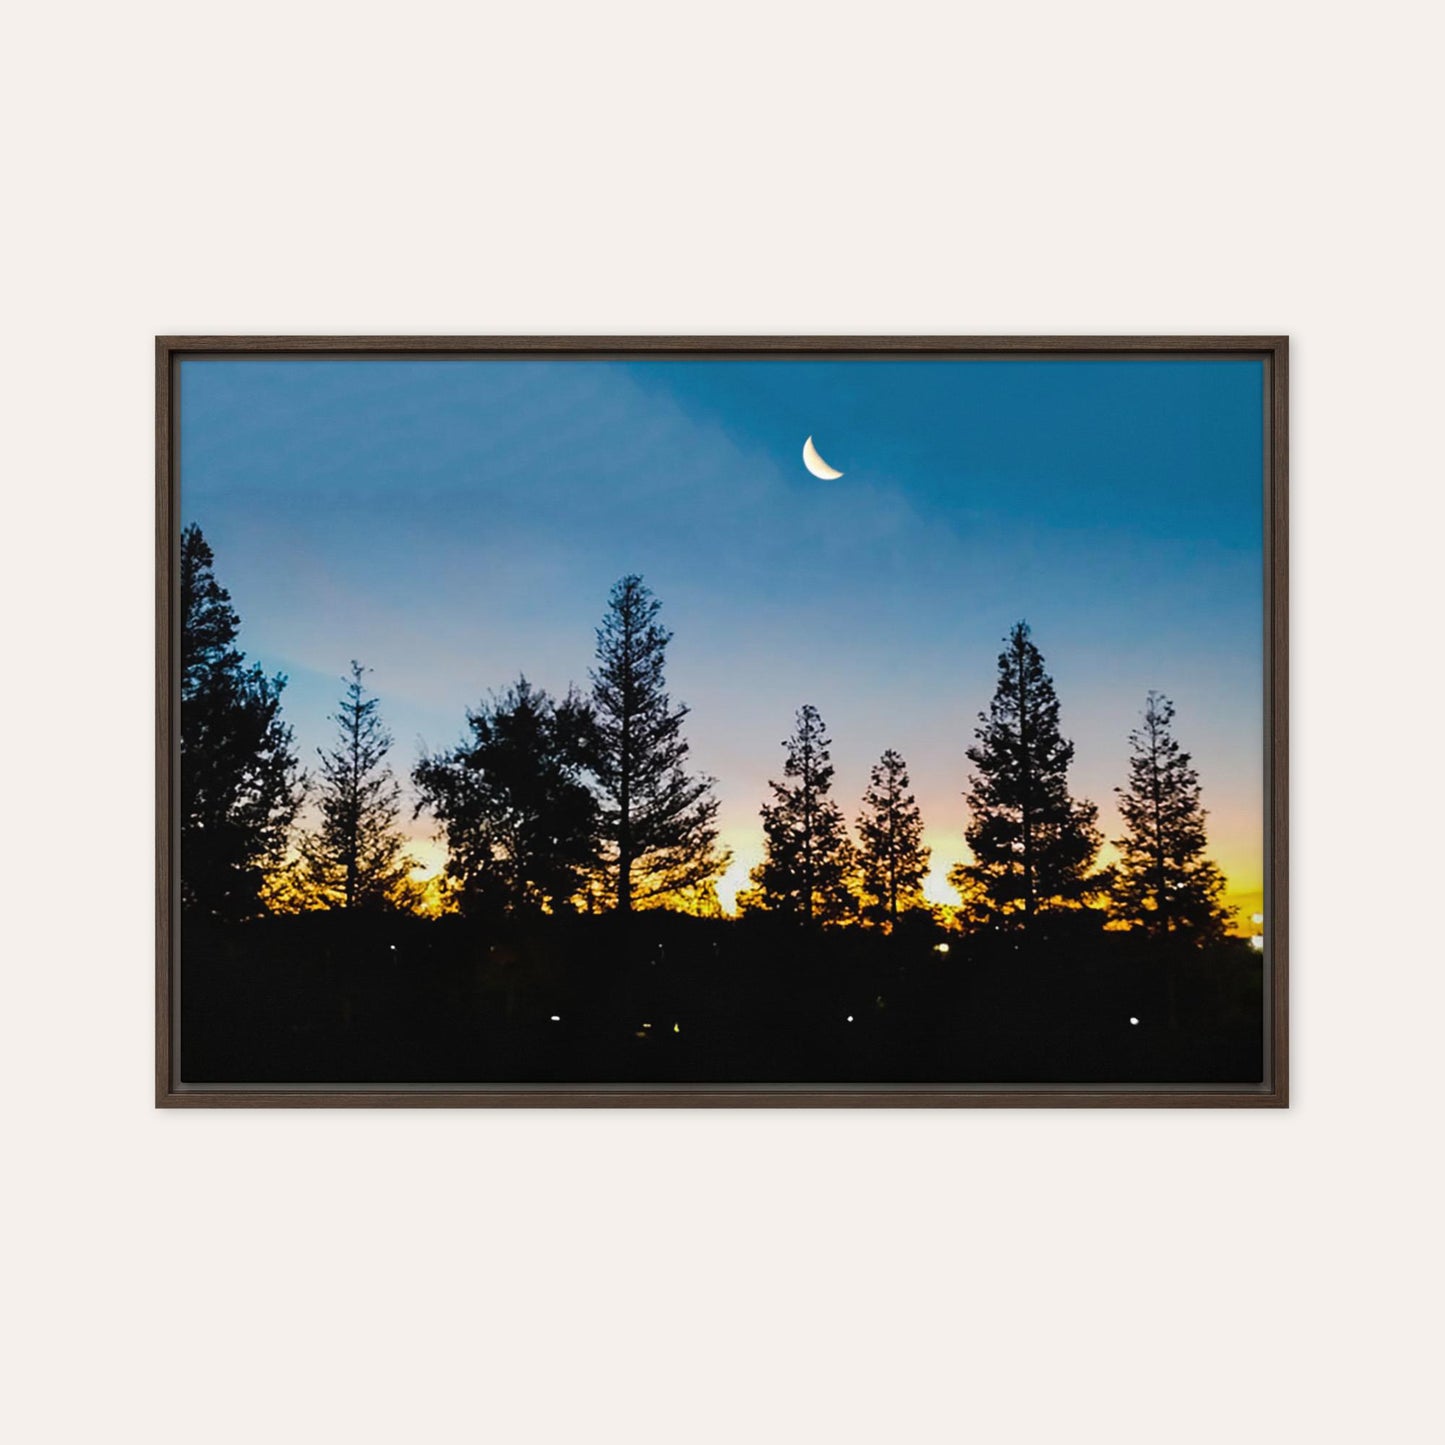 The Winter Moon Framed Print